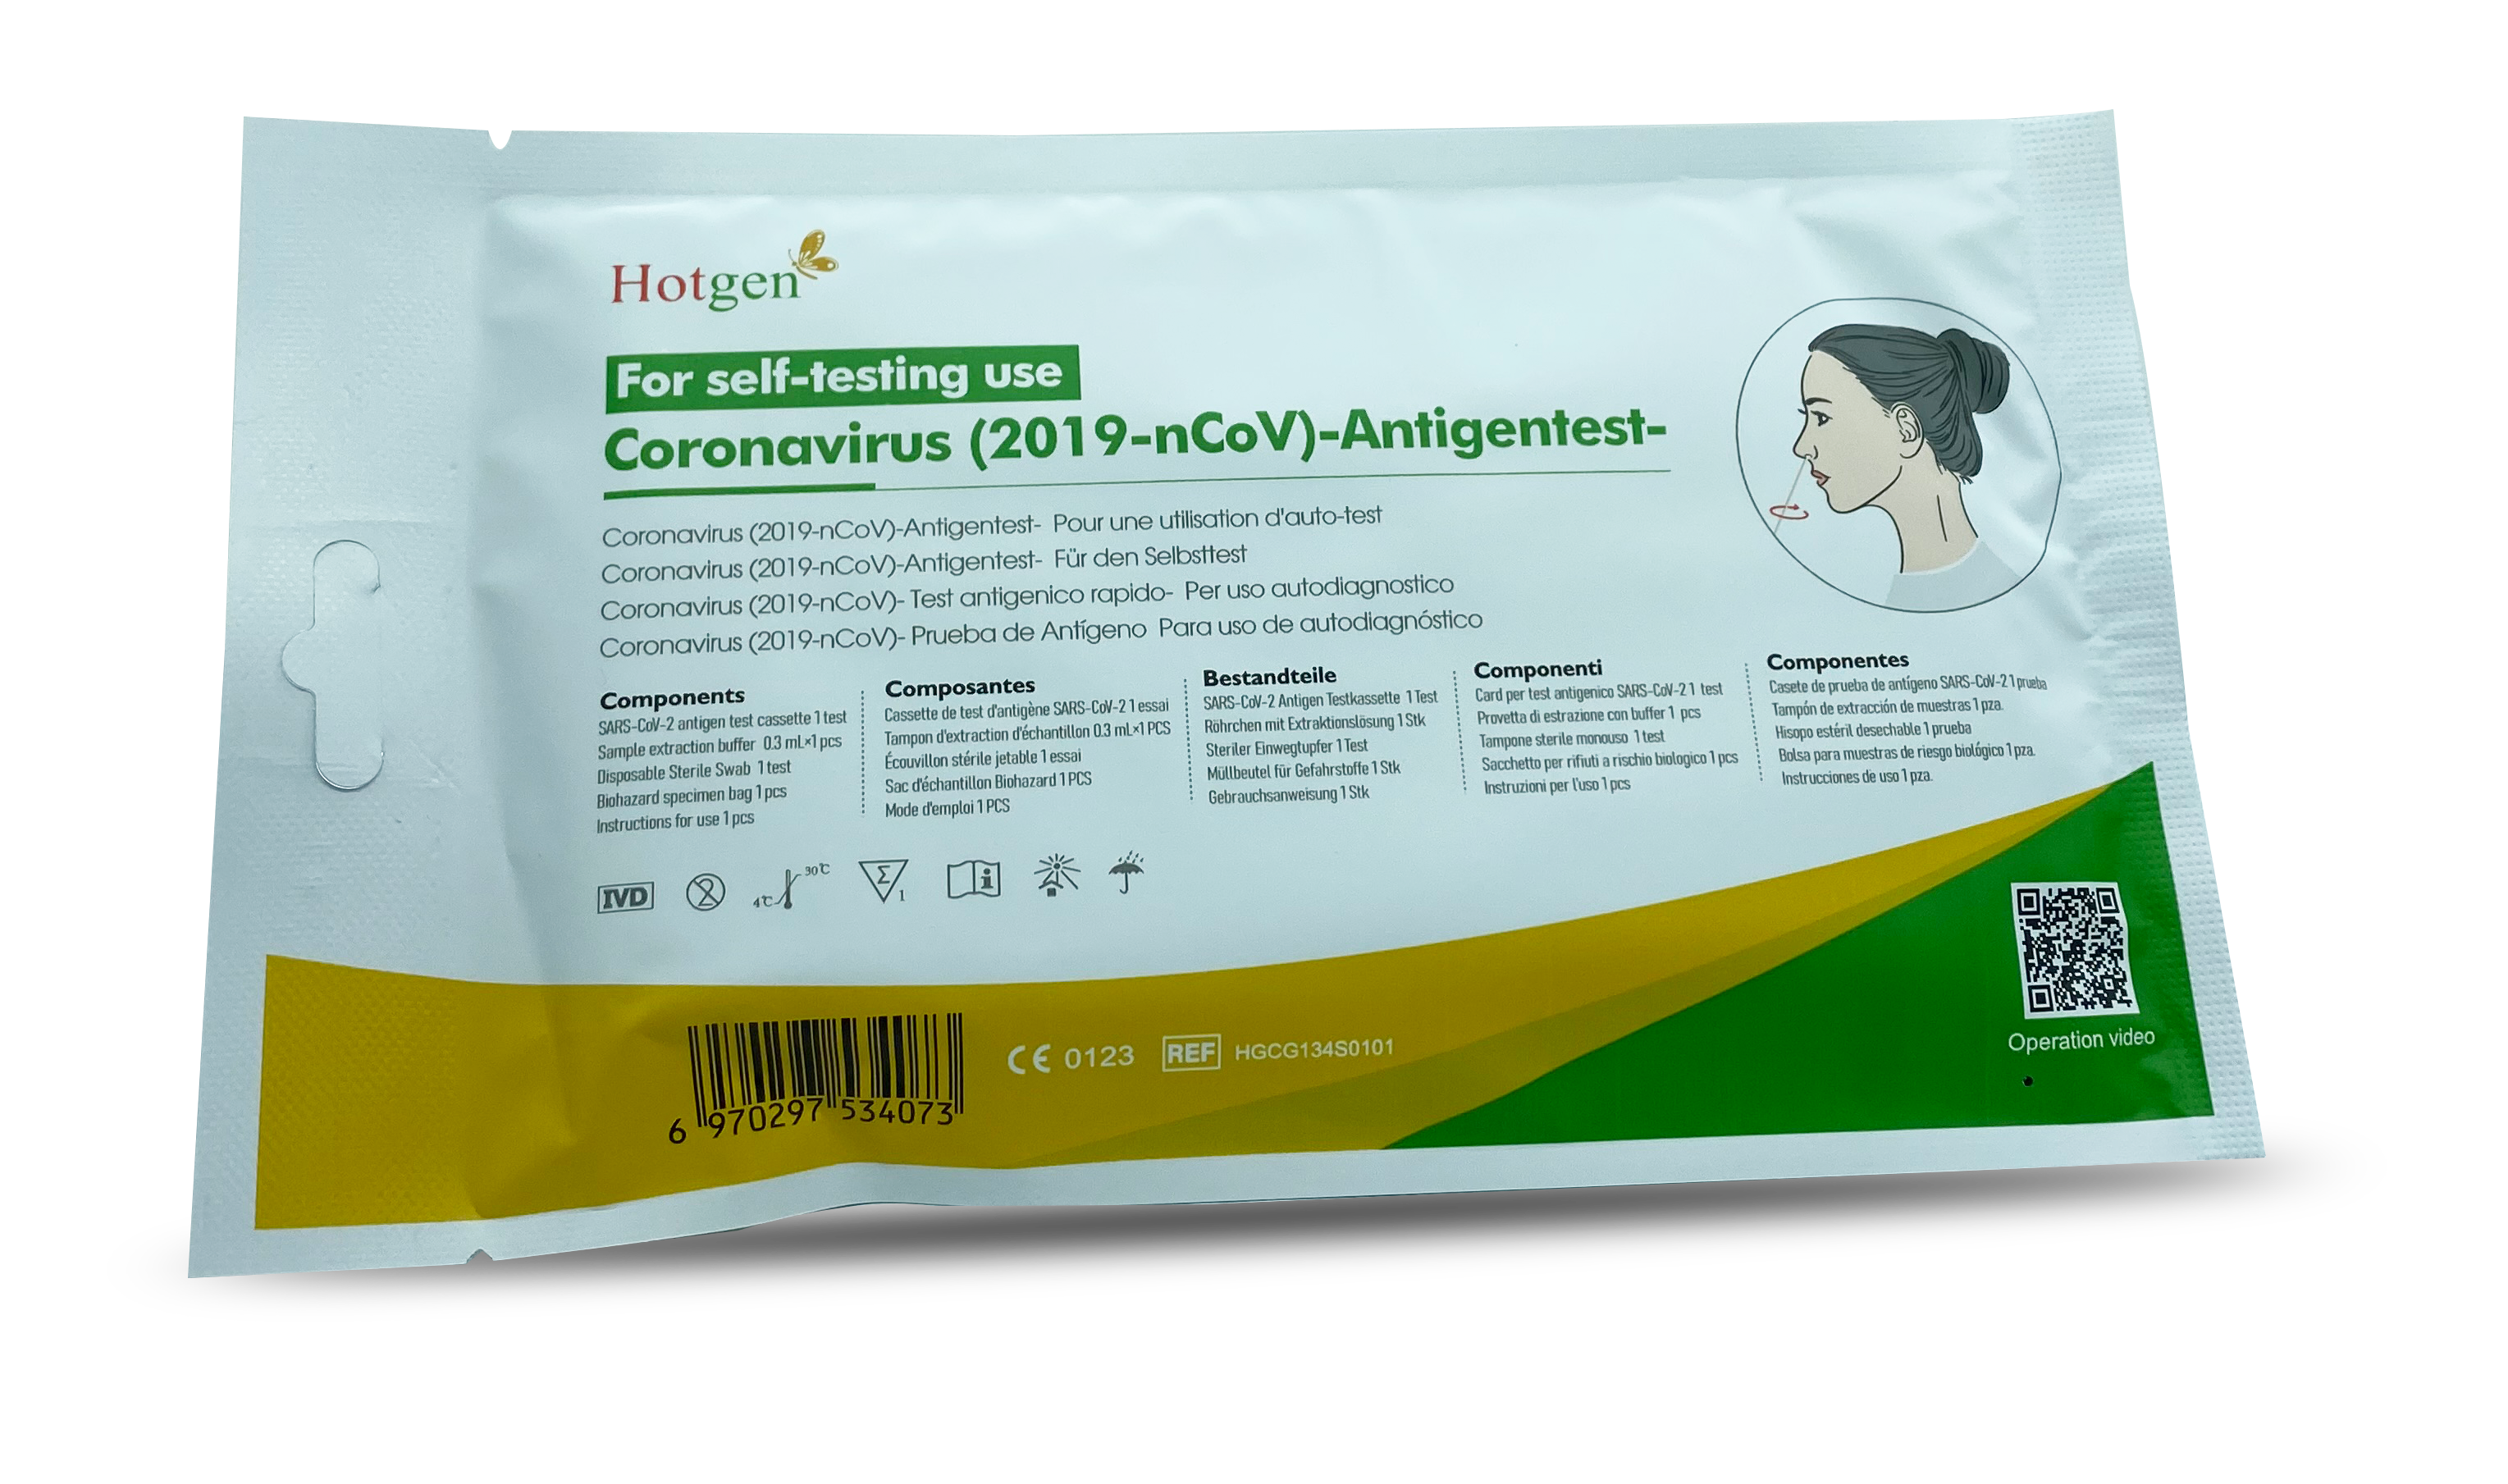 Hotgen Coronavirus 2019-nCoV Selbsttest mit CE0123